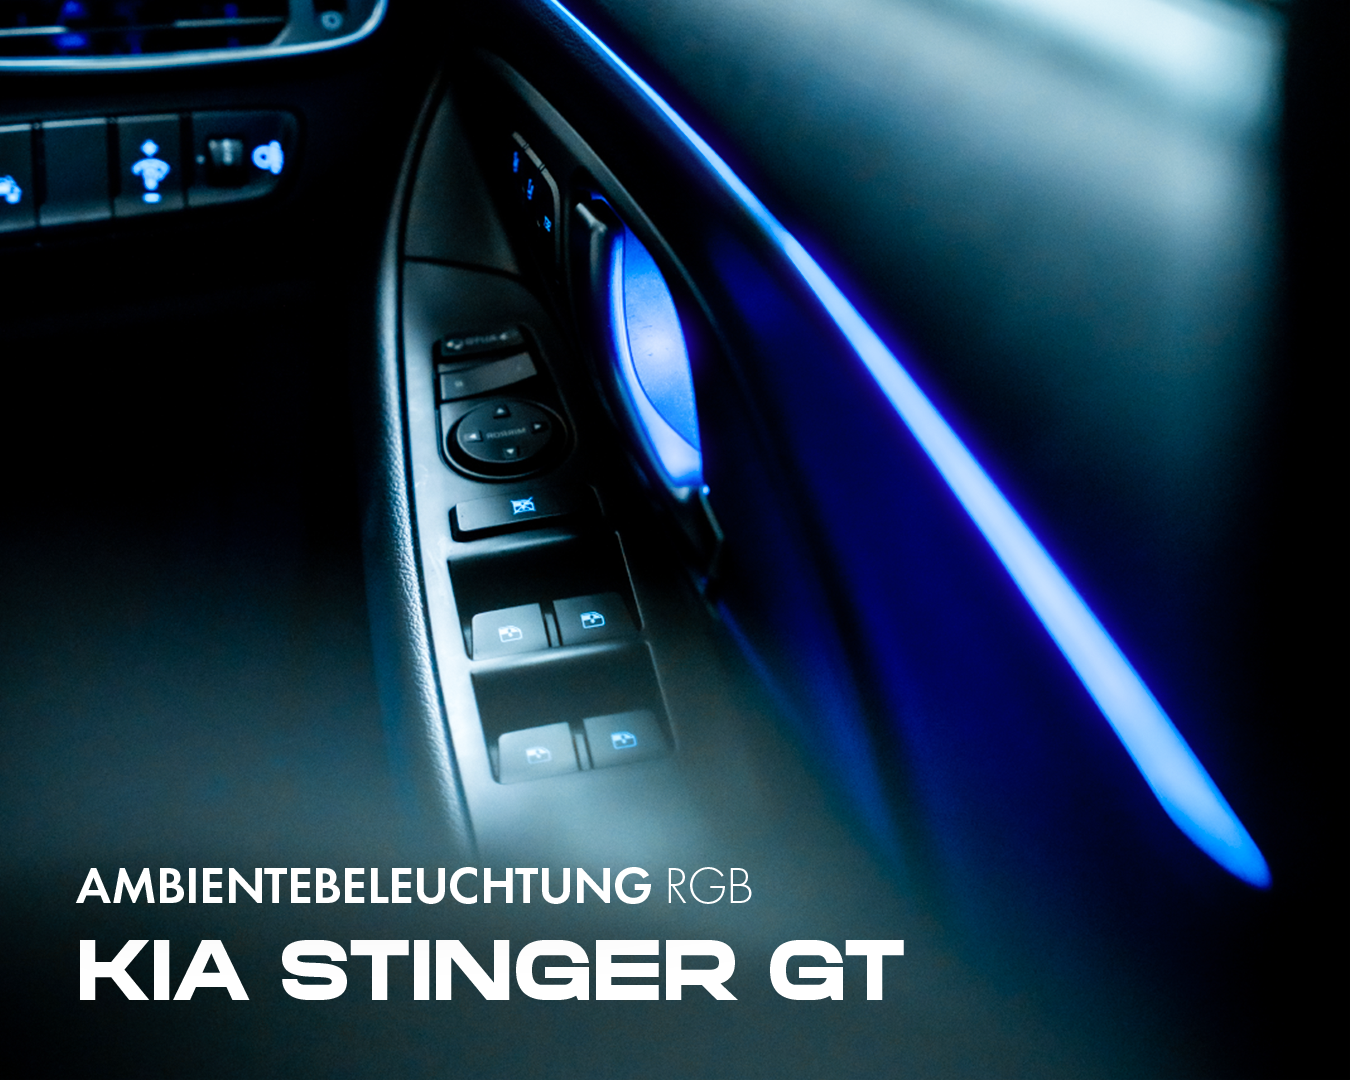 Kia Stinger GT ambient lighting RGB retrofit